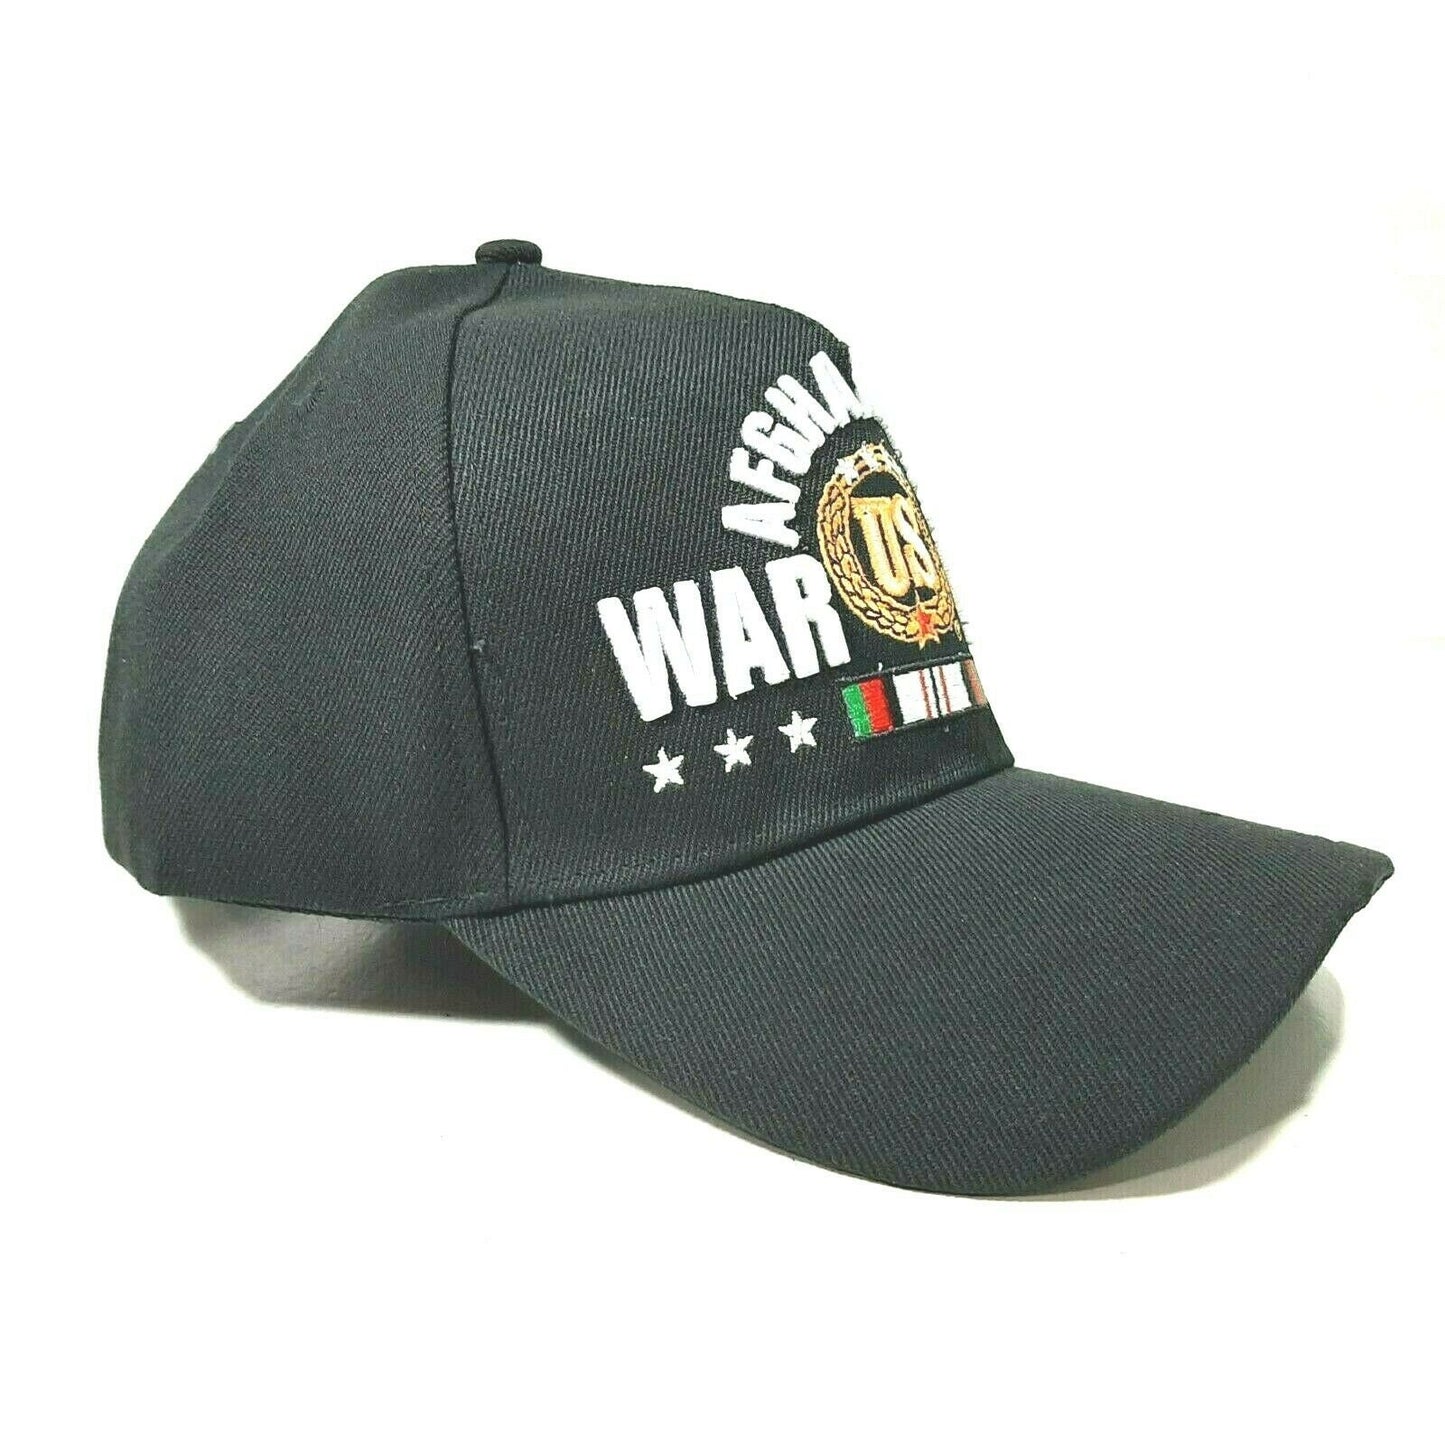 Afghanistan War Veteran Mens Hat Cap Black Embroidered Adjustable Acrylic